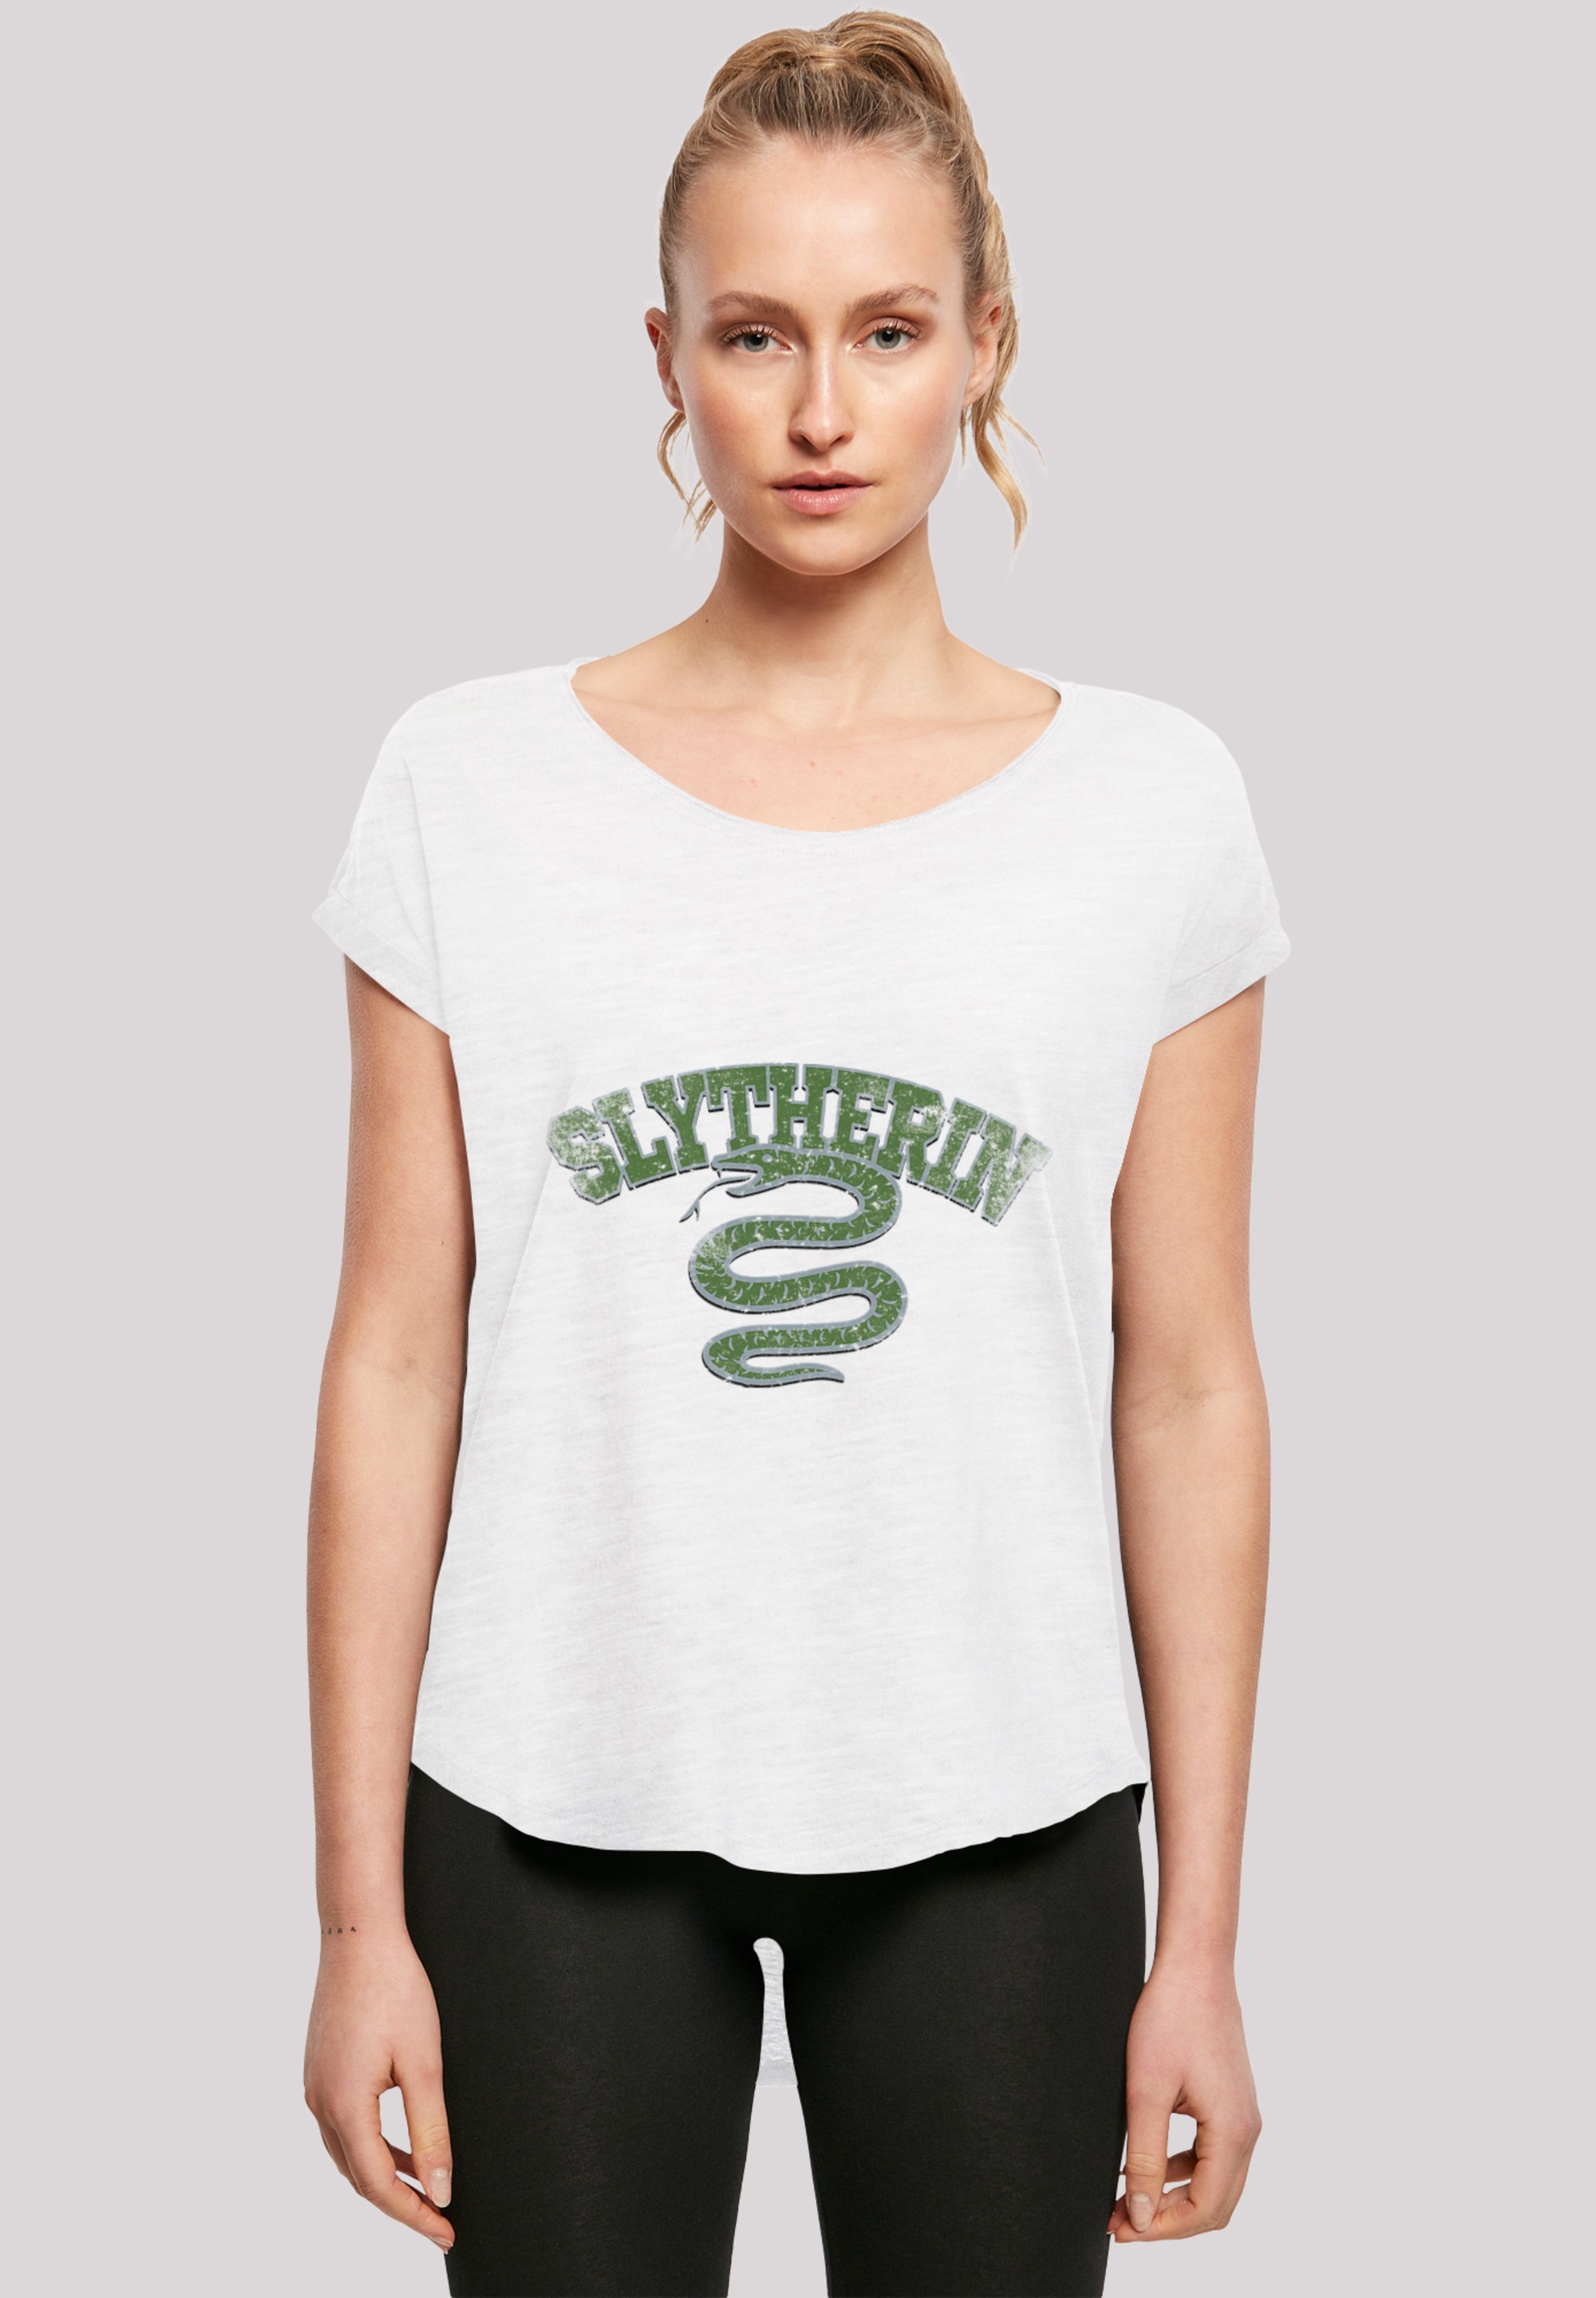 Potter F4NT4STIC Print Slytherin Sport »Harry T-Shirt Wappen«, shoppen